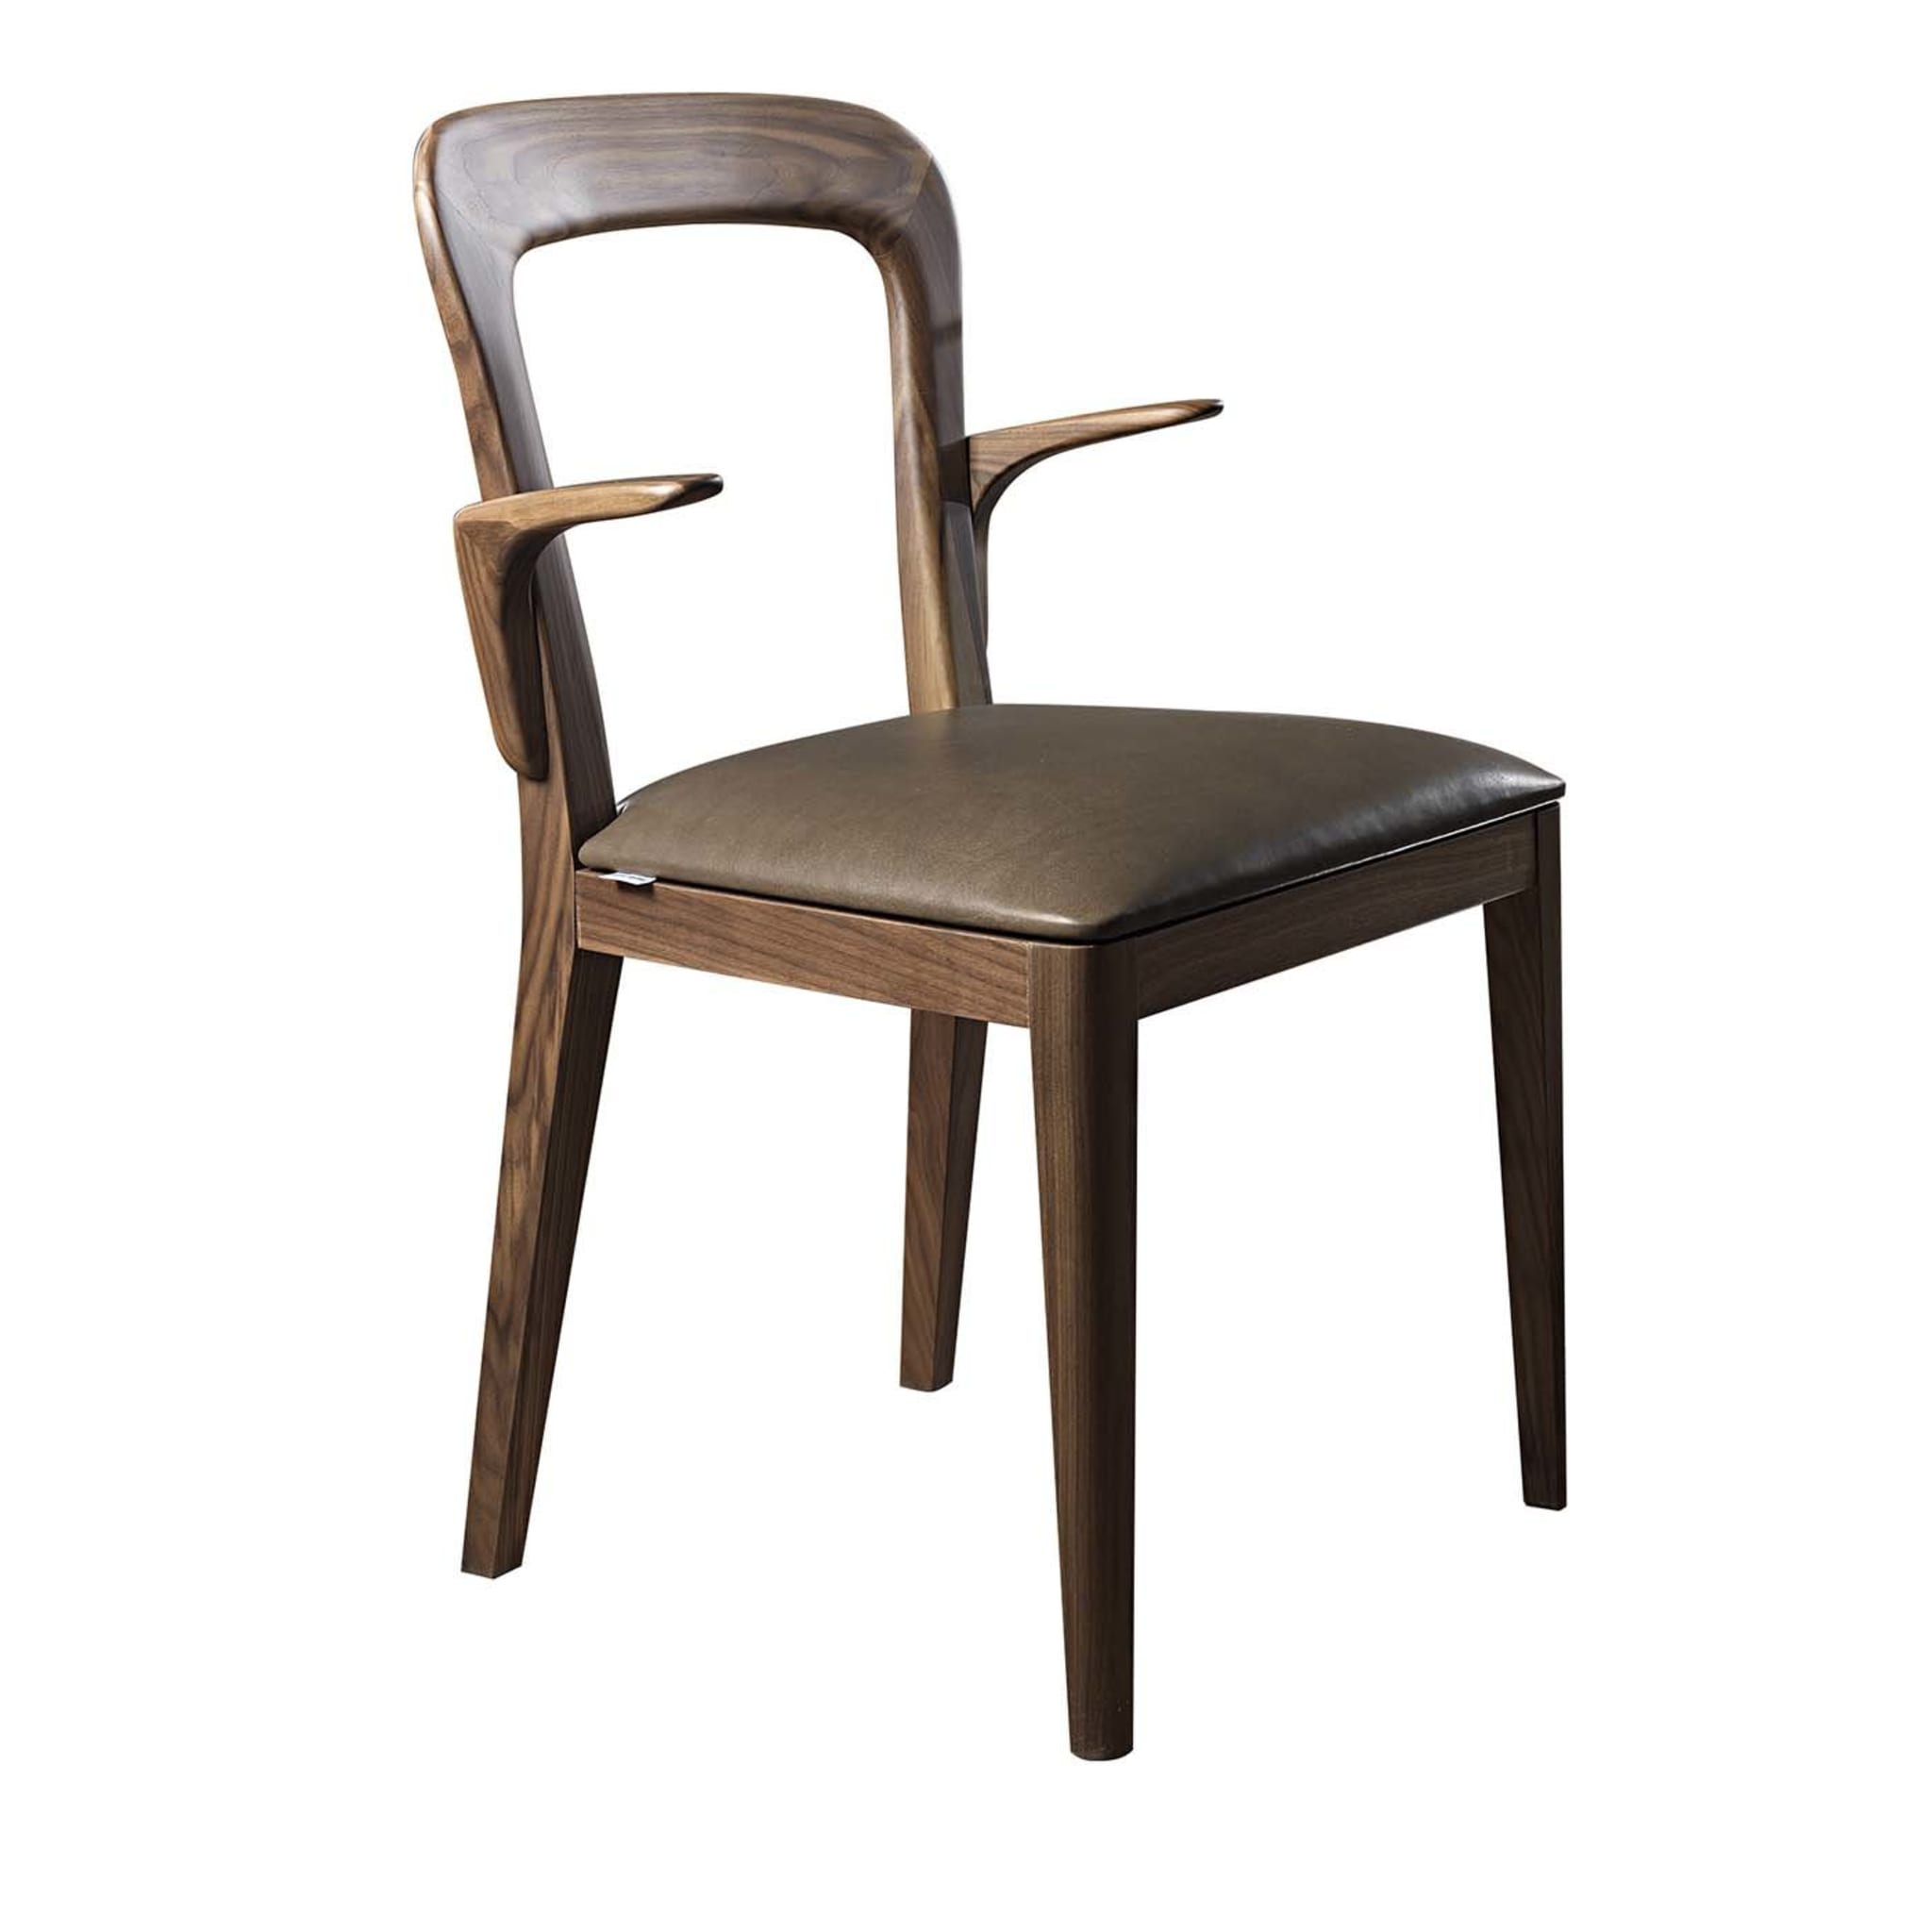 Gaya Chair by Stefano Bigi - Main view